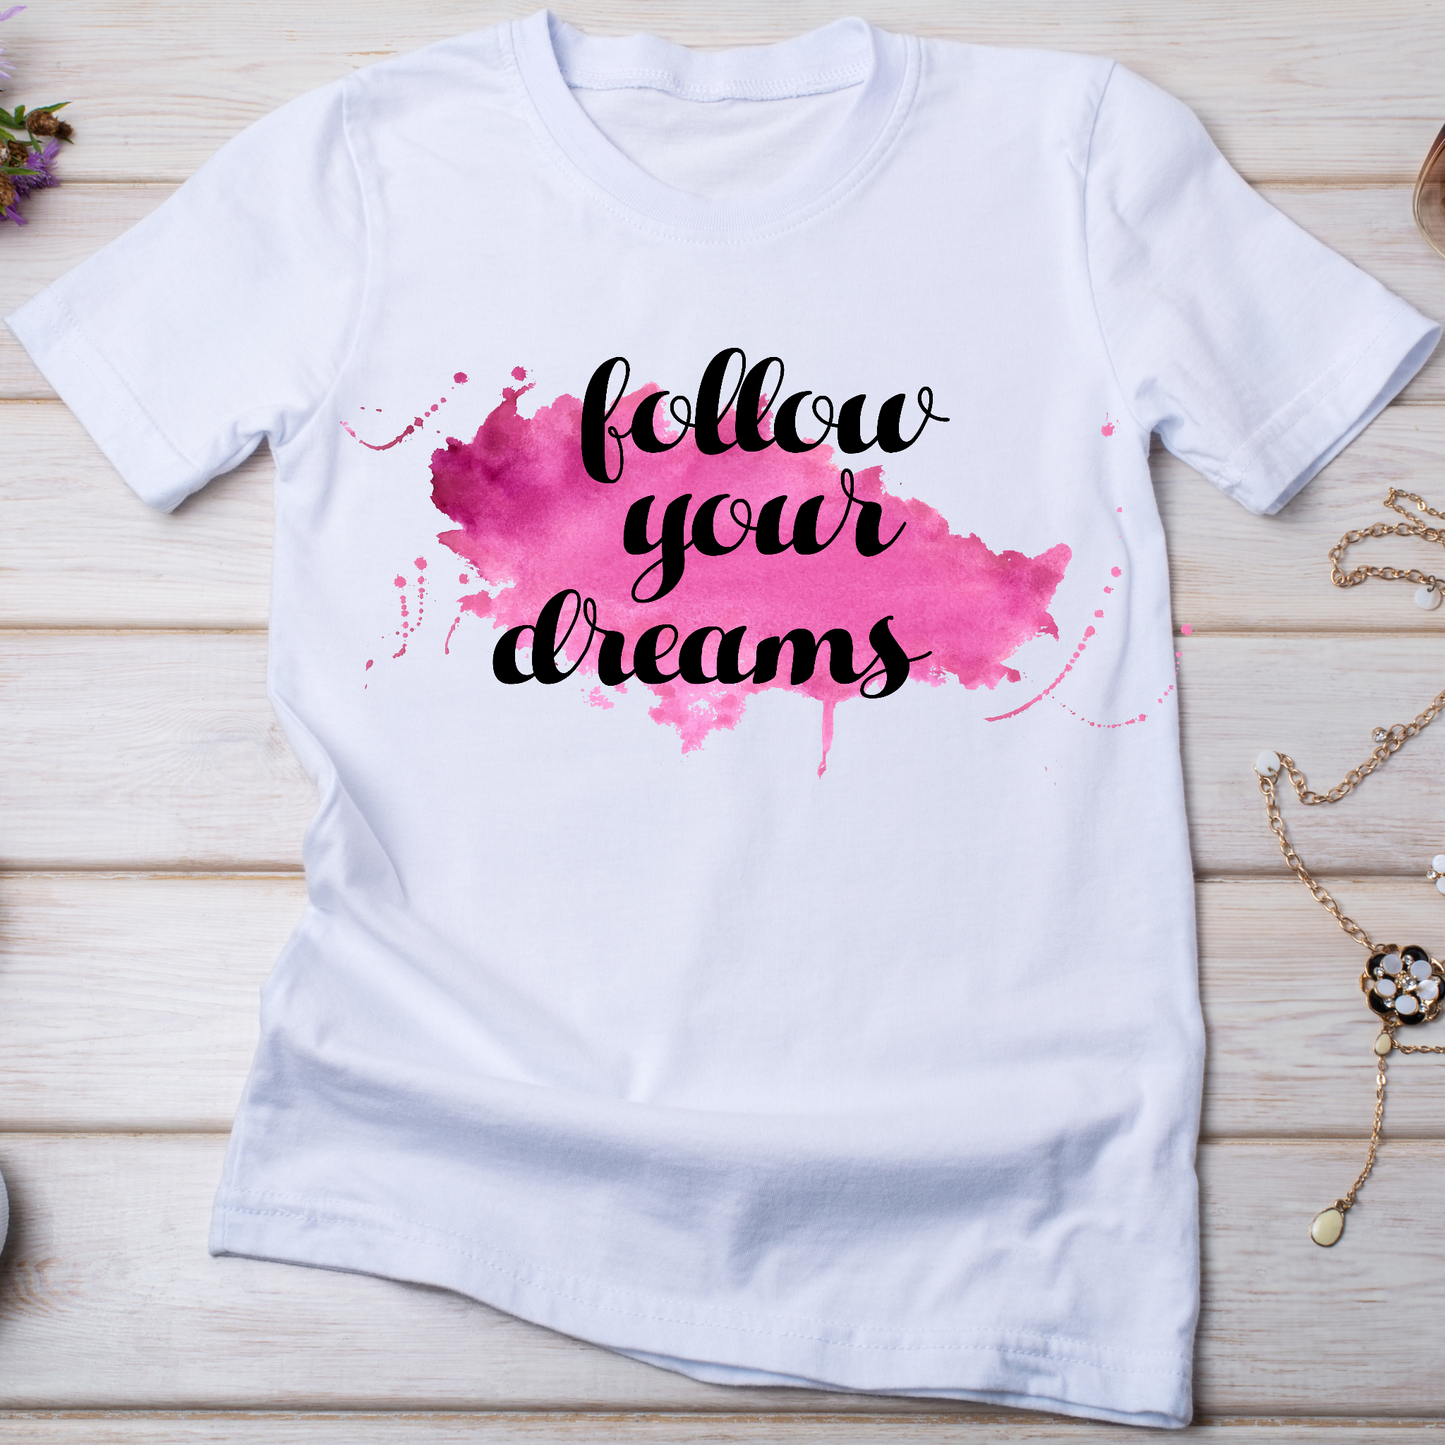 Follow your dreams motivational Women's t-shirt - Premium t-shirt from Lees Krazy Teez - Just $19.95! Shop now at Lees Krazy Teez